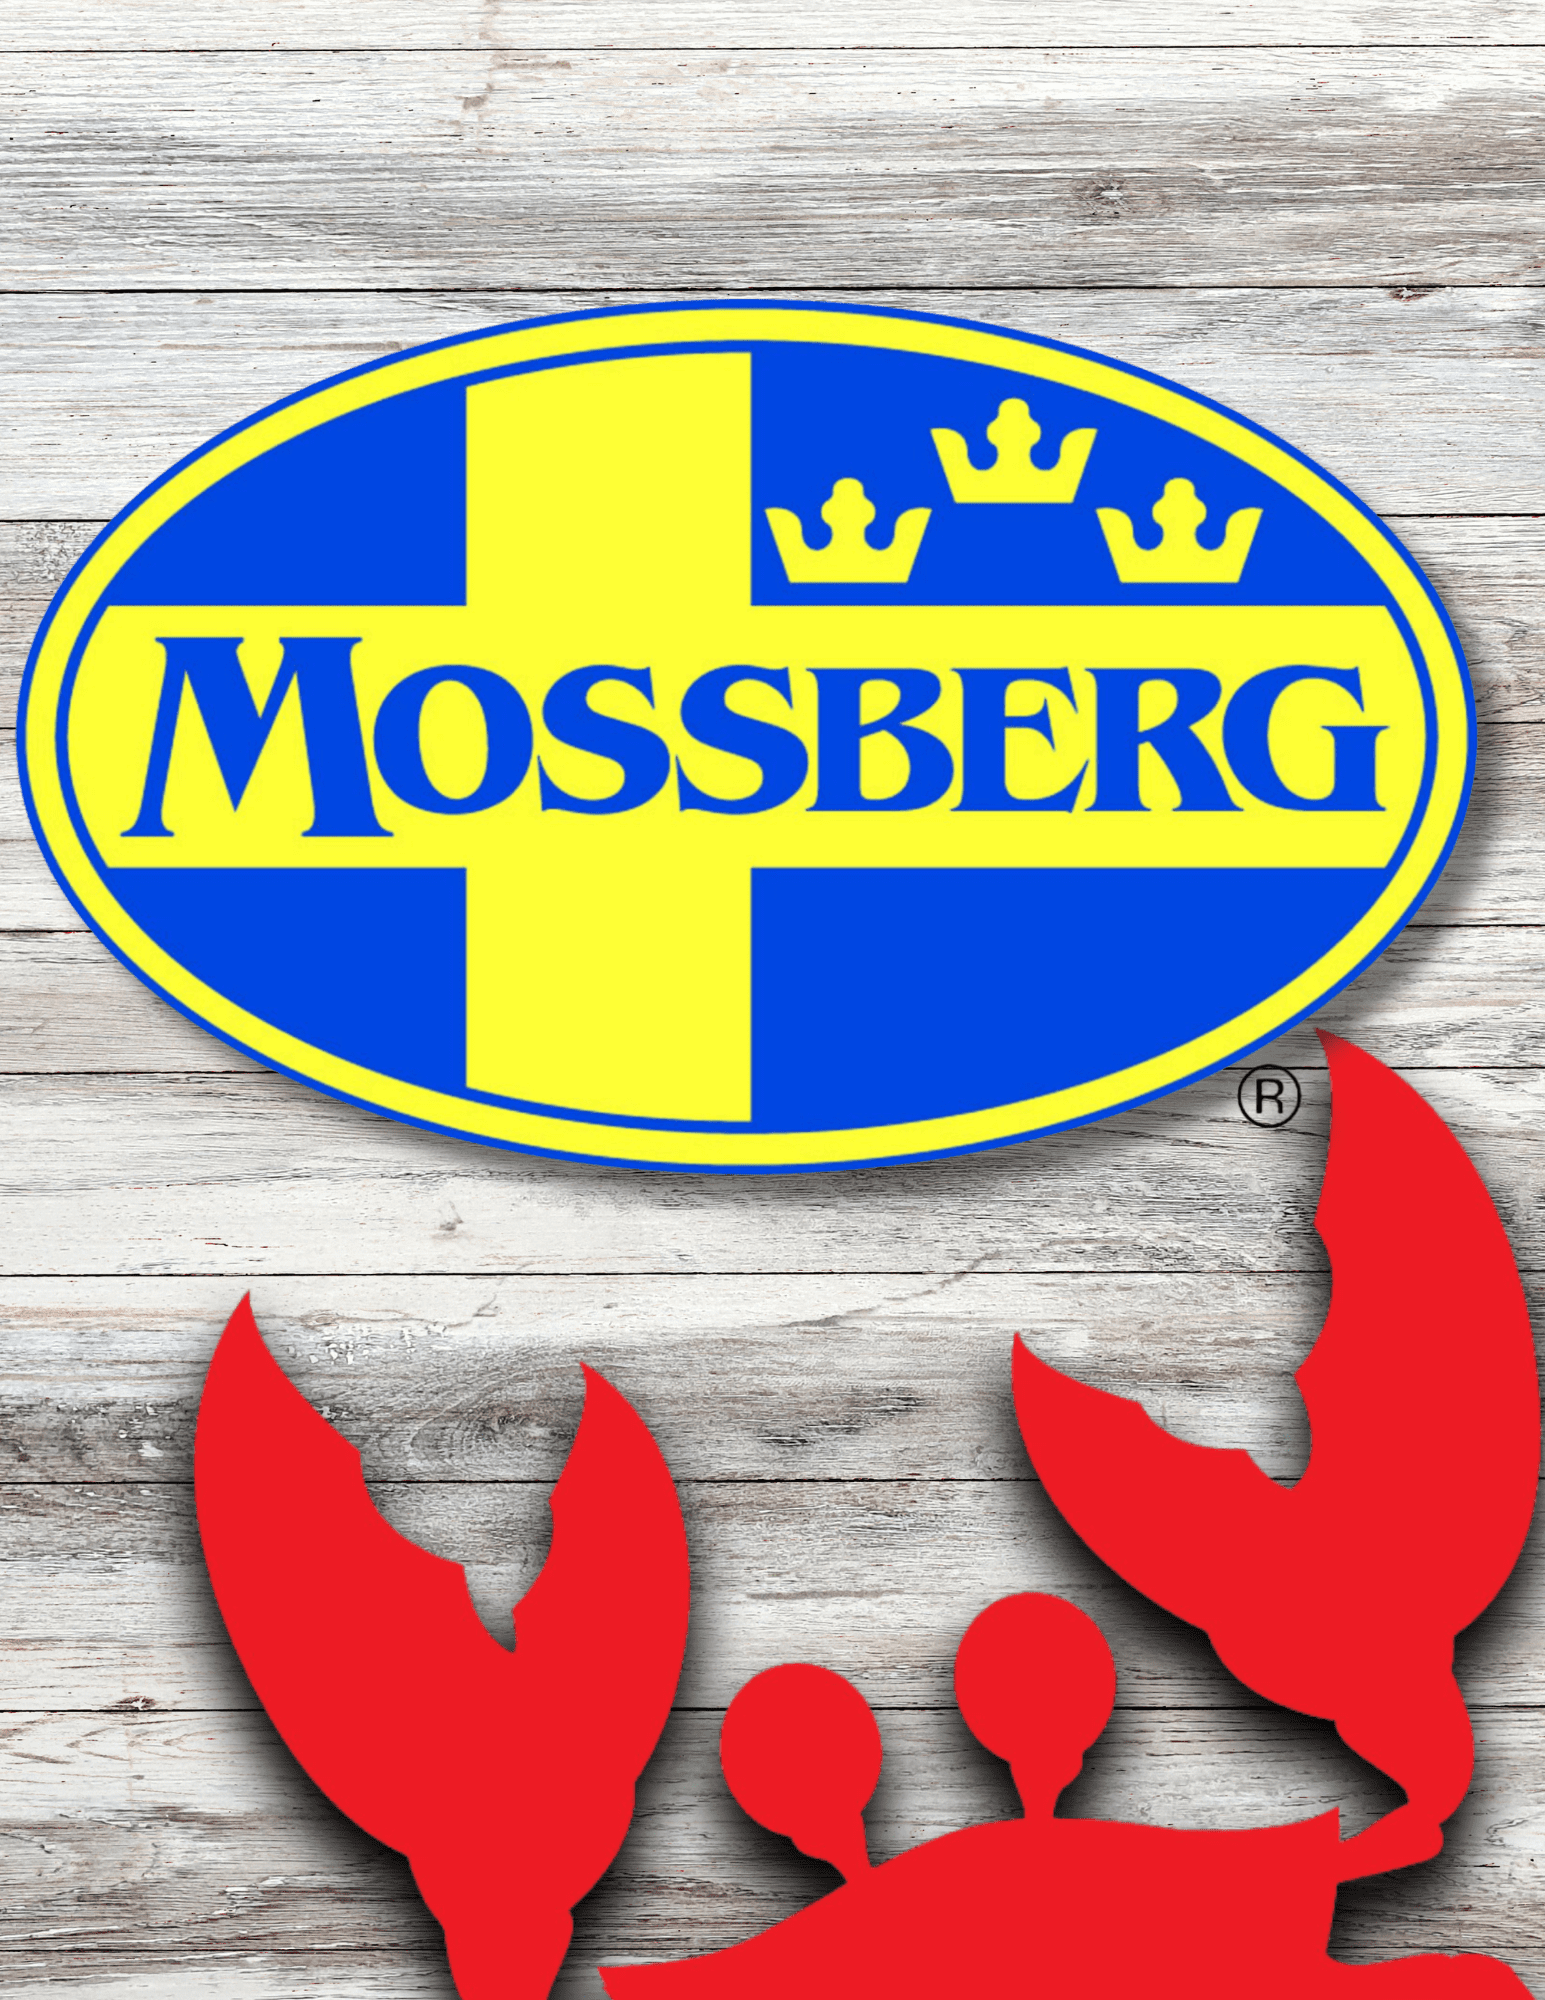 Mossberg